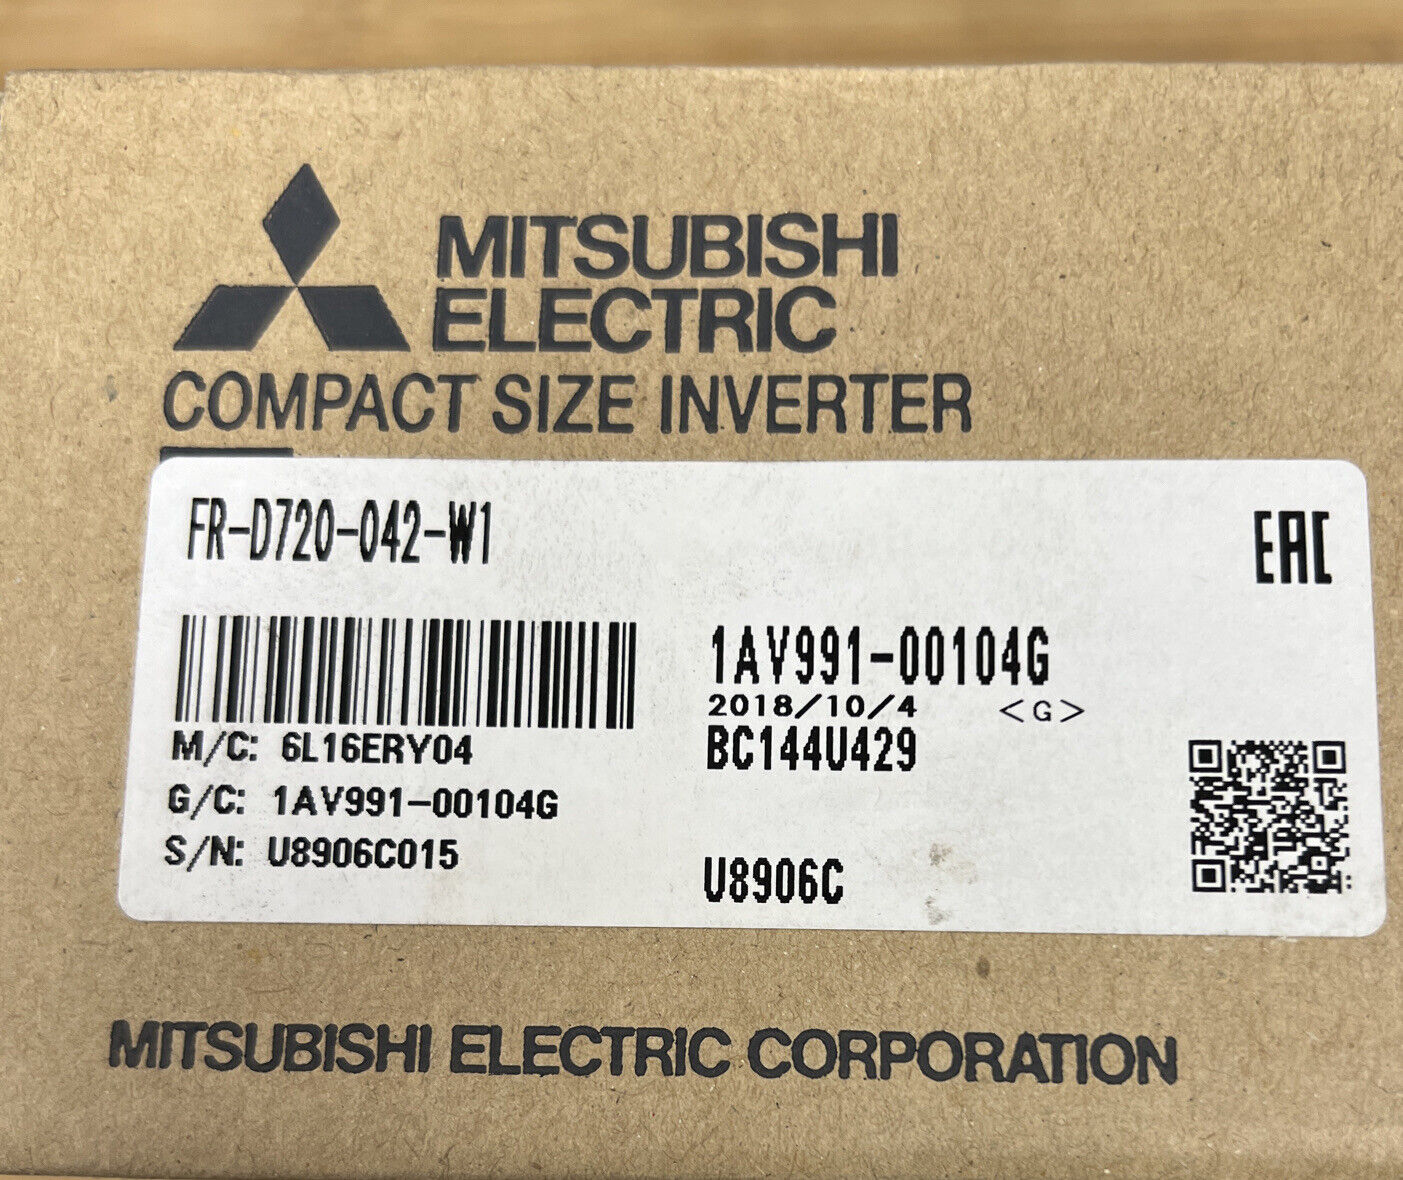 Mitsubishi Electric FR-D720-042-W1 New Compact Size Inverter (OV100)